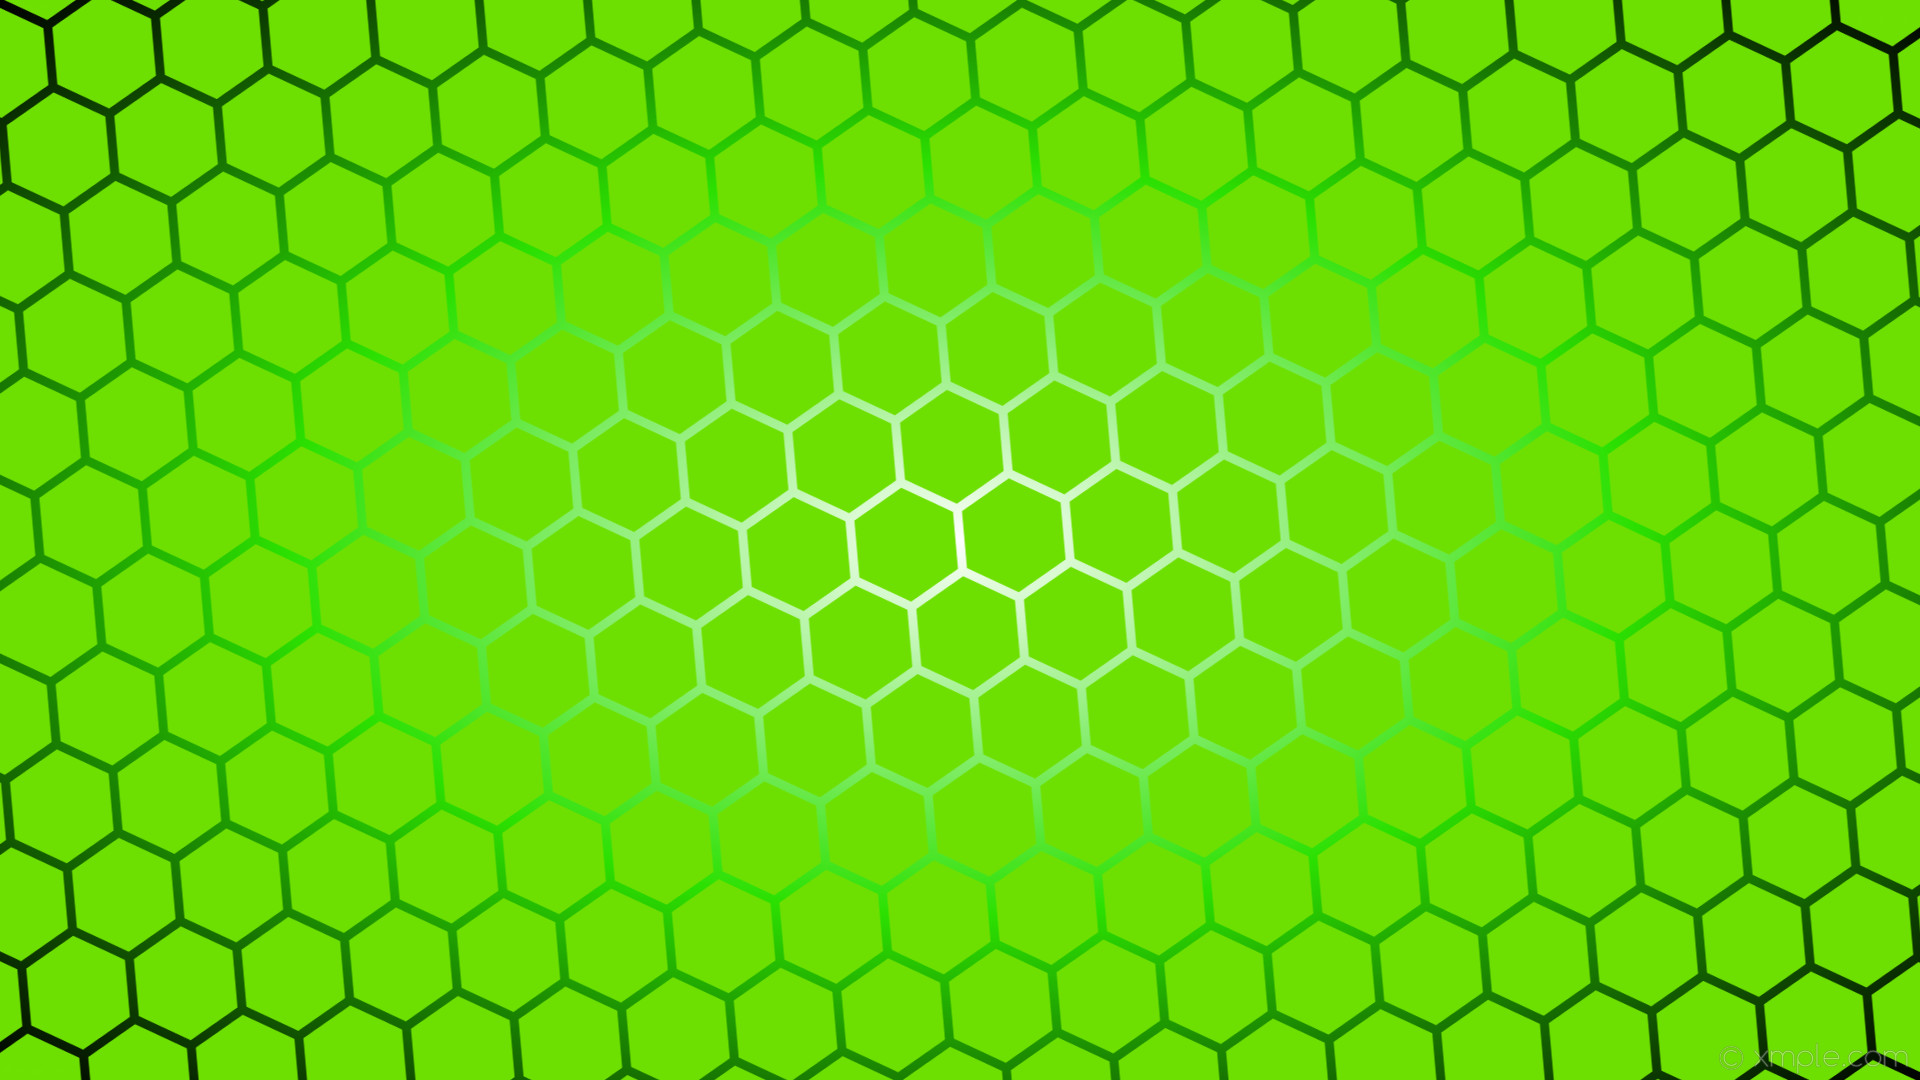 Free Neon Green Aesthetic Wallpaper  Download in Illustrator EPS SVG  JPG PNG  Templatenet